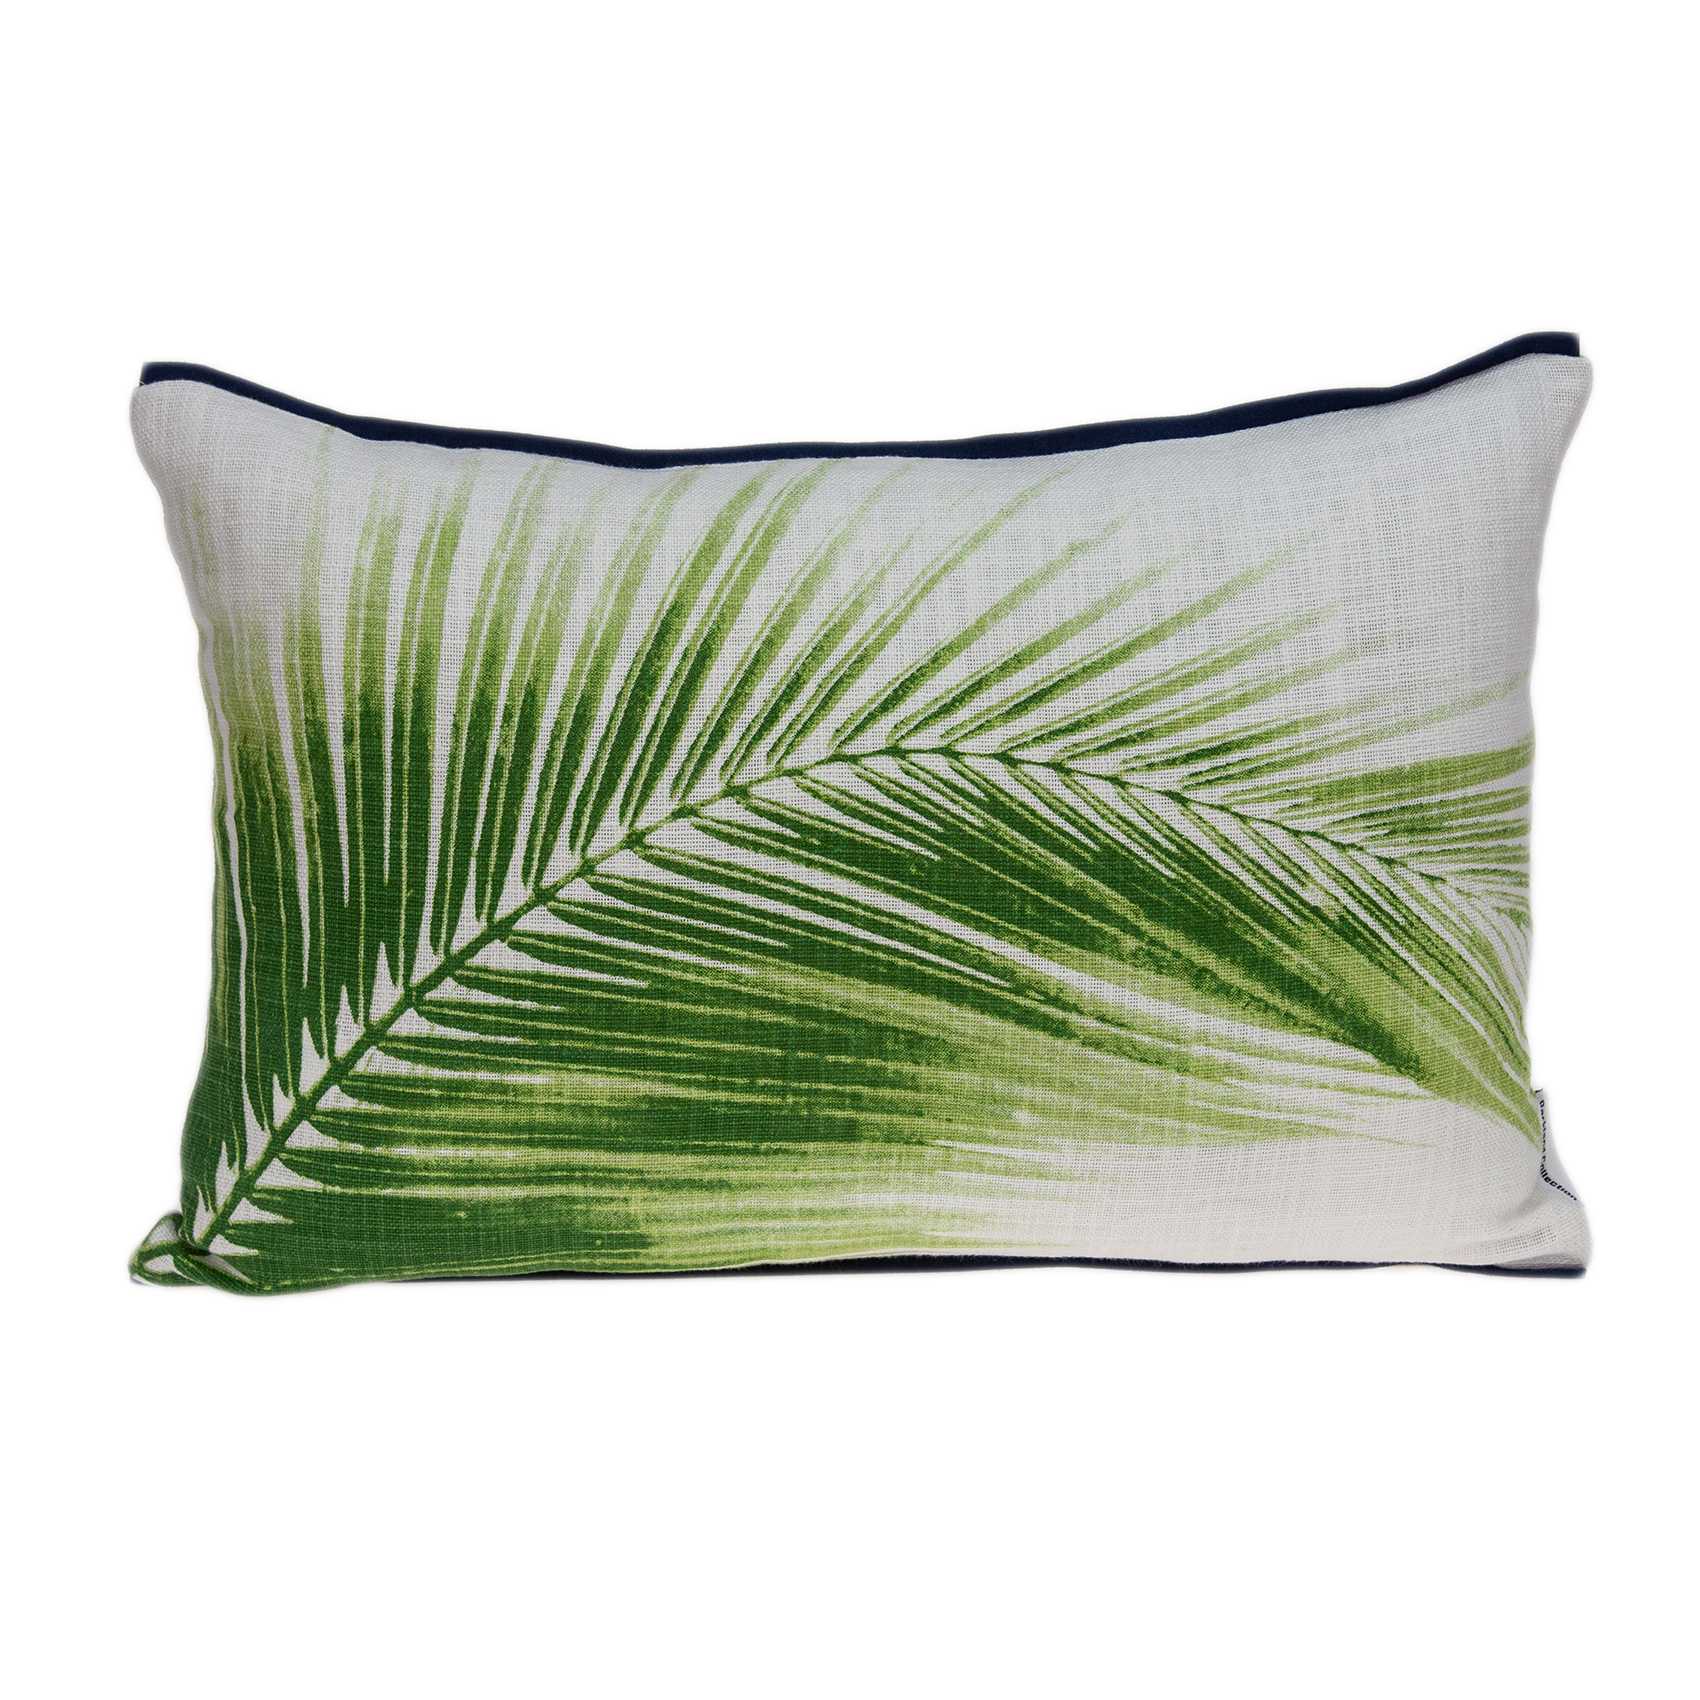 20" x 0.5" x 14" Tropical Green Cotton Pillow Cover